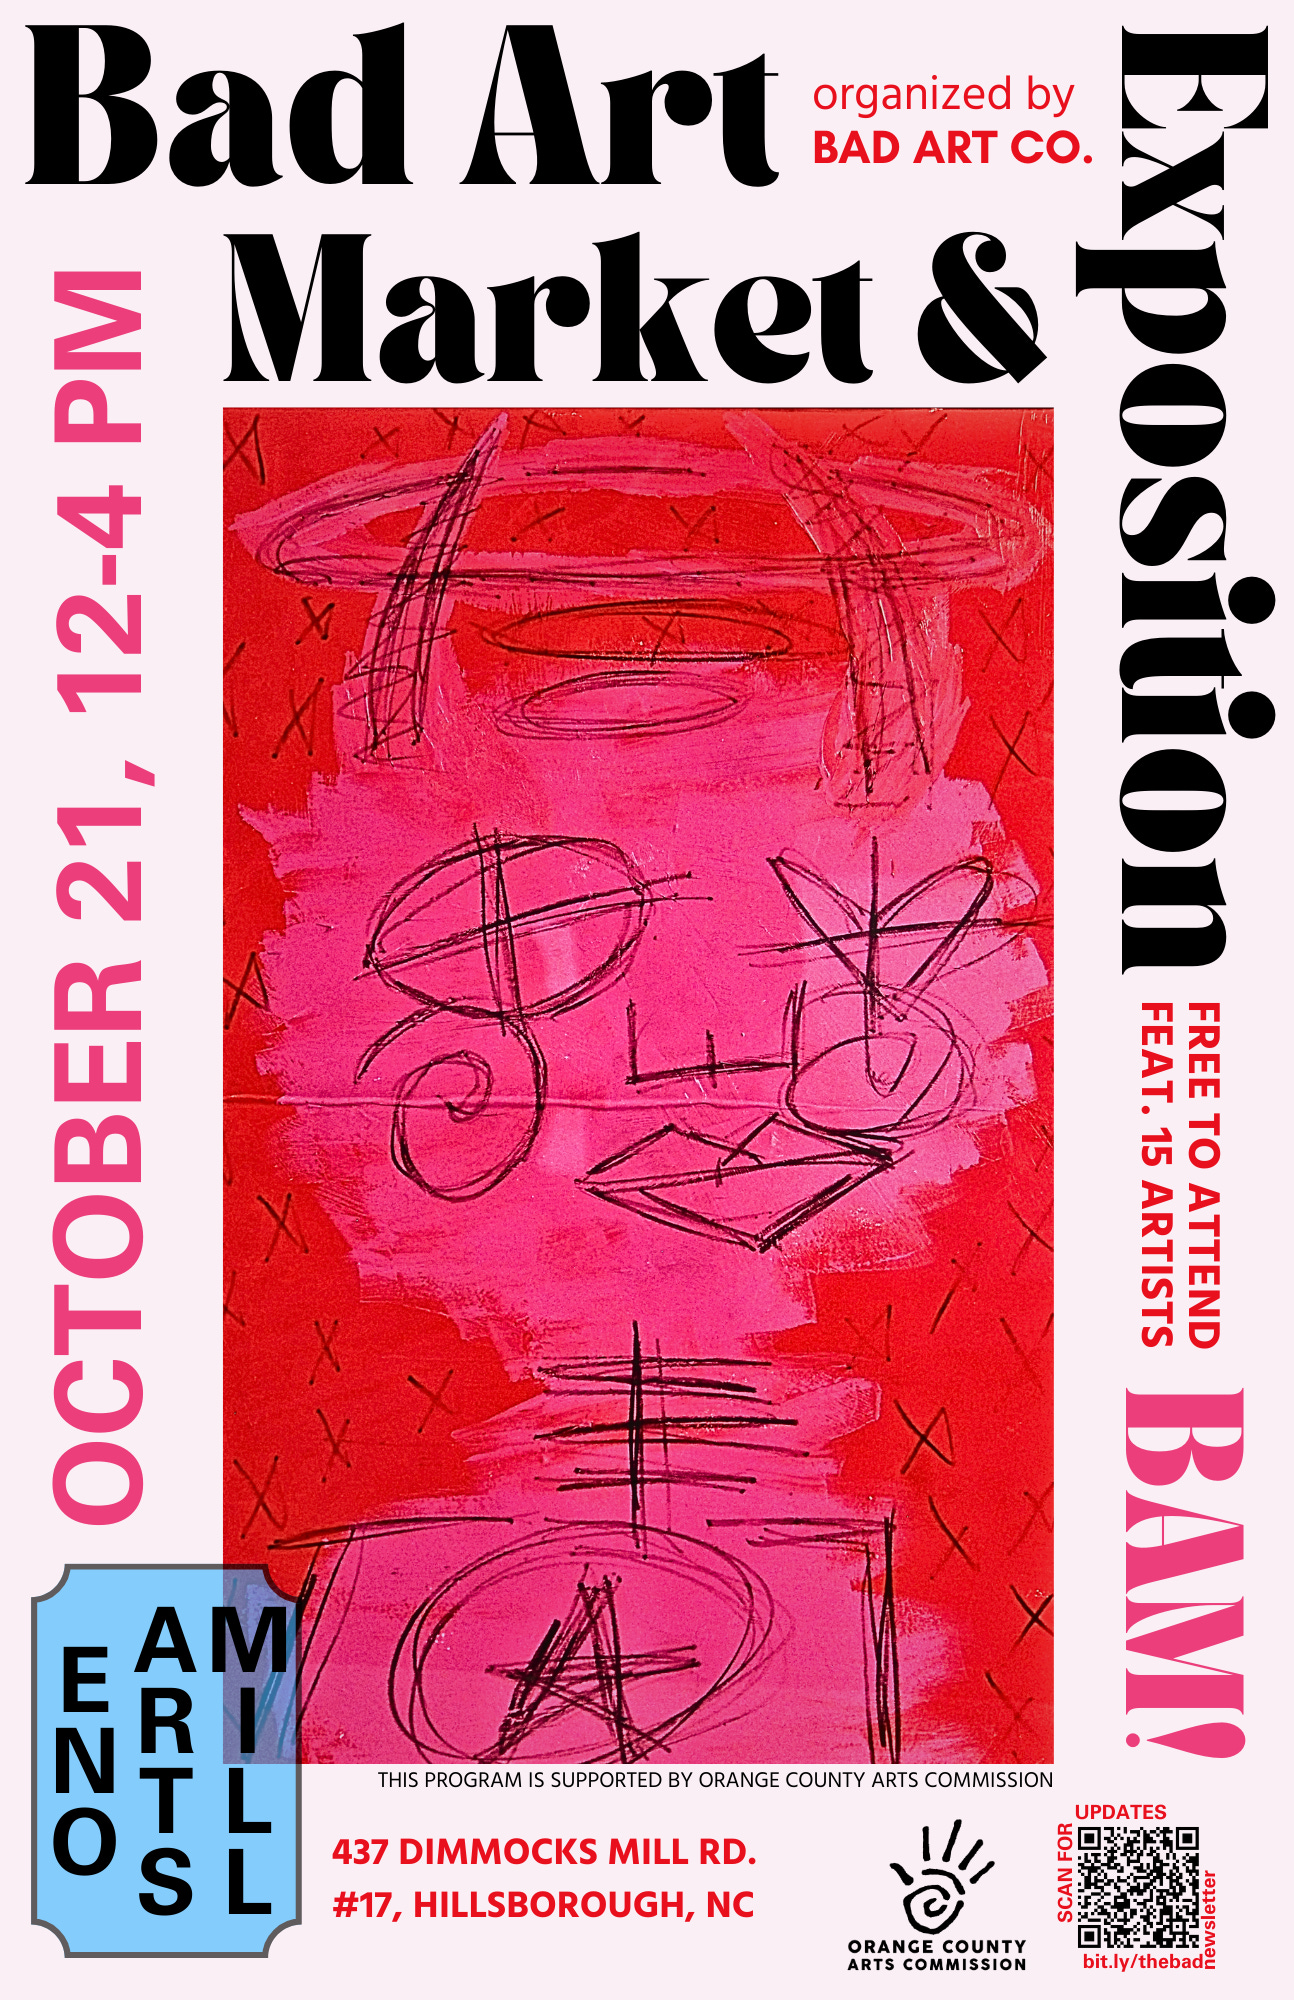 Bad Art Market & Expo promo poster.